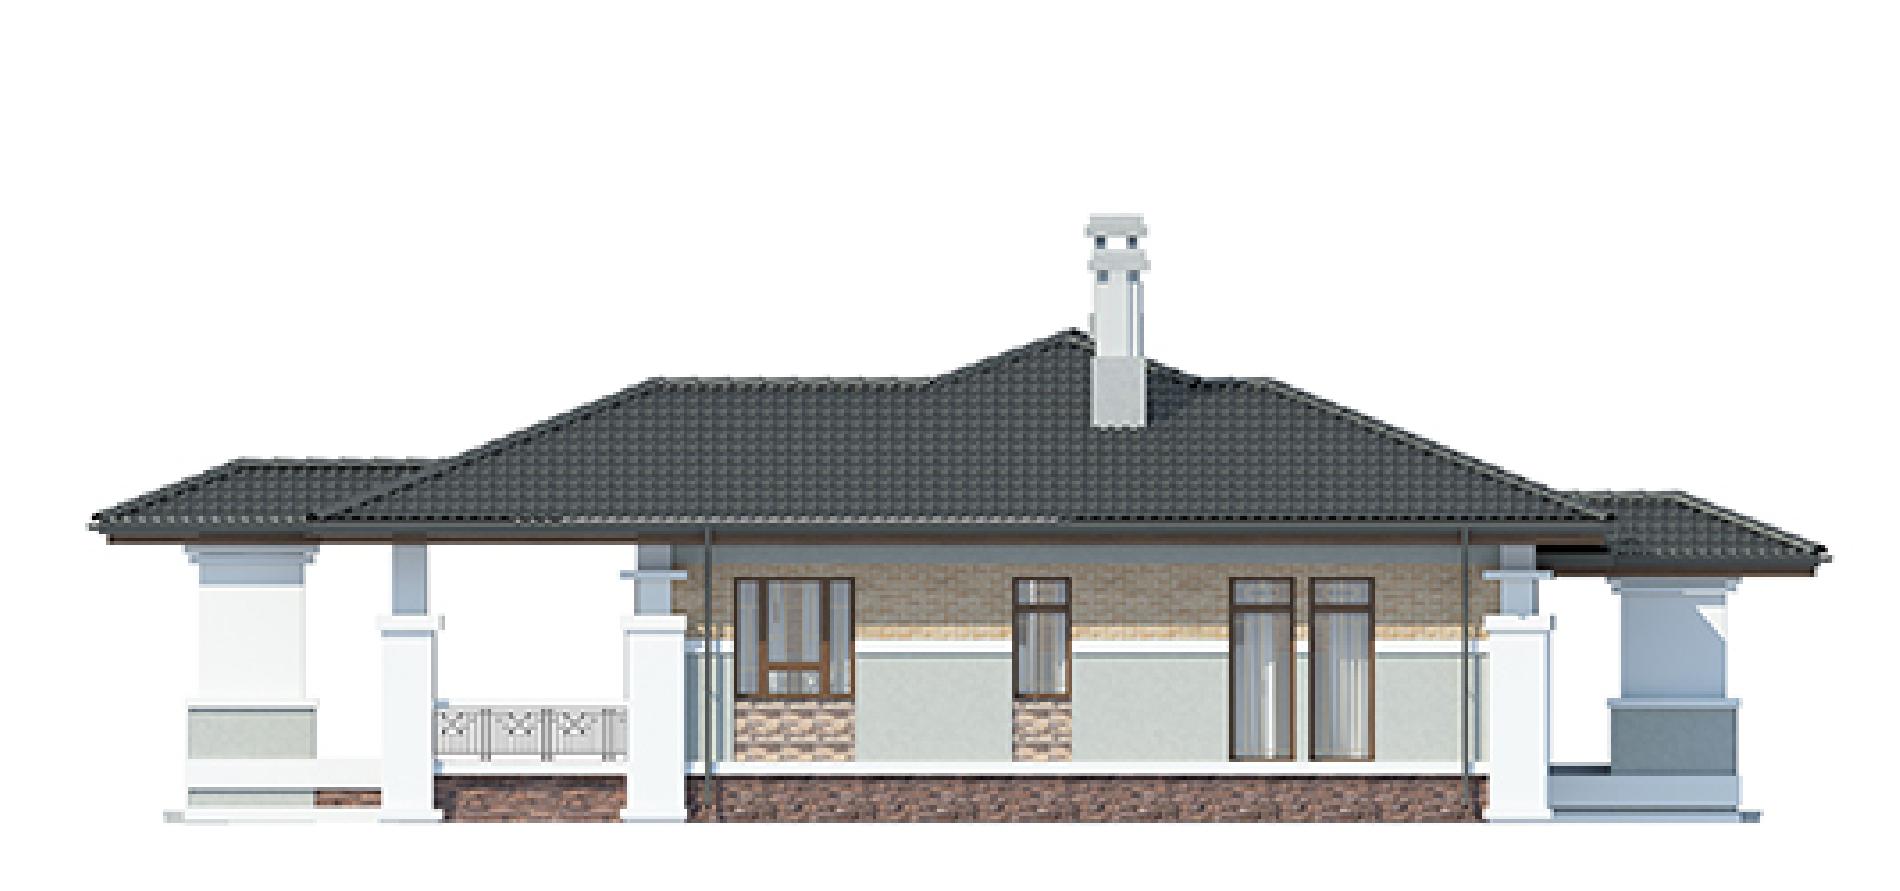 Фасады проекта дома №cp-90-12 cp-90-12_f1.jpg